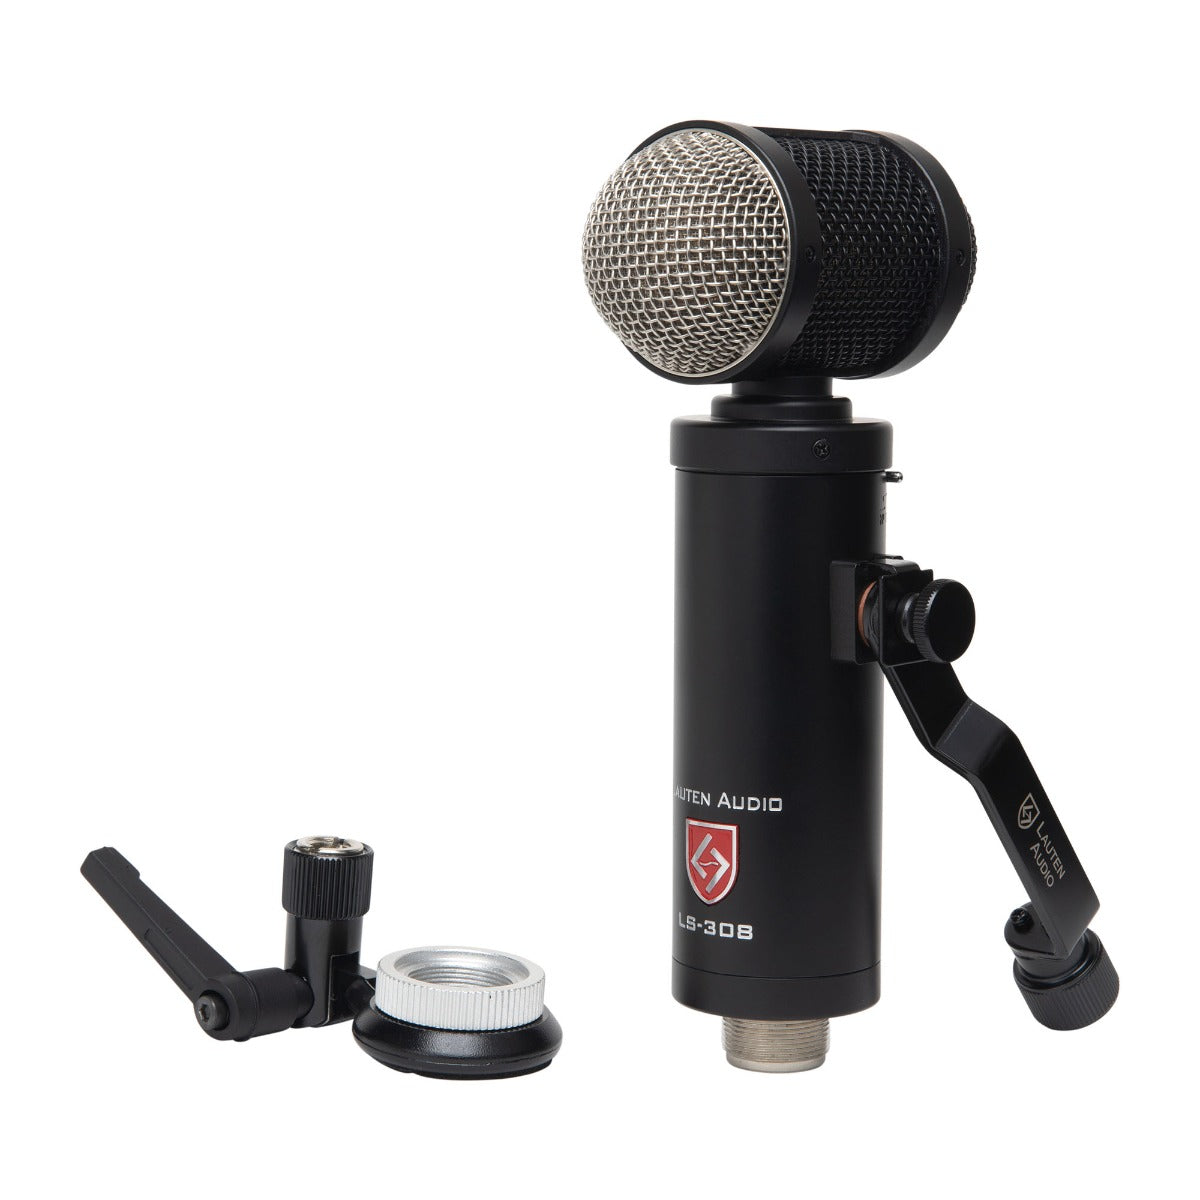 Lauten Audio LS-308 Instrument Condenser Microphone, View 1